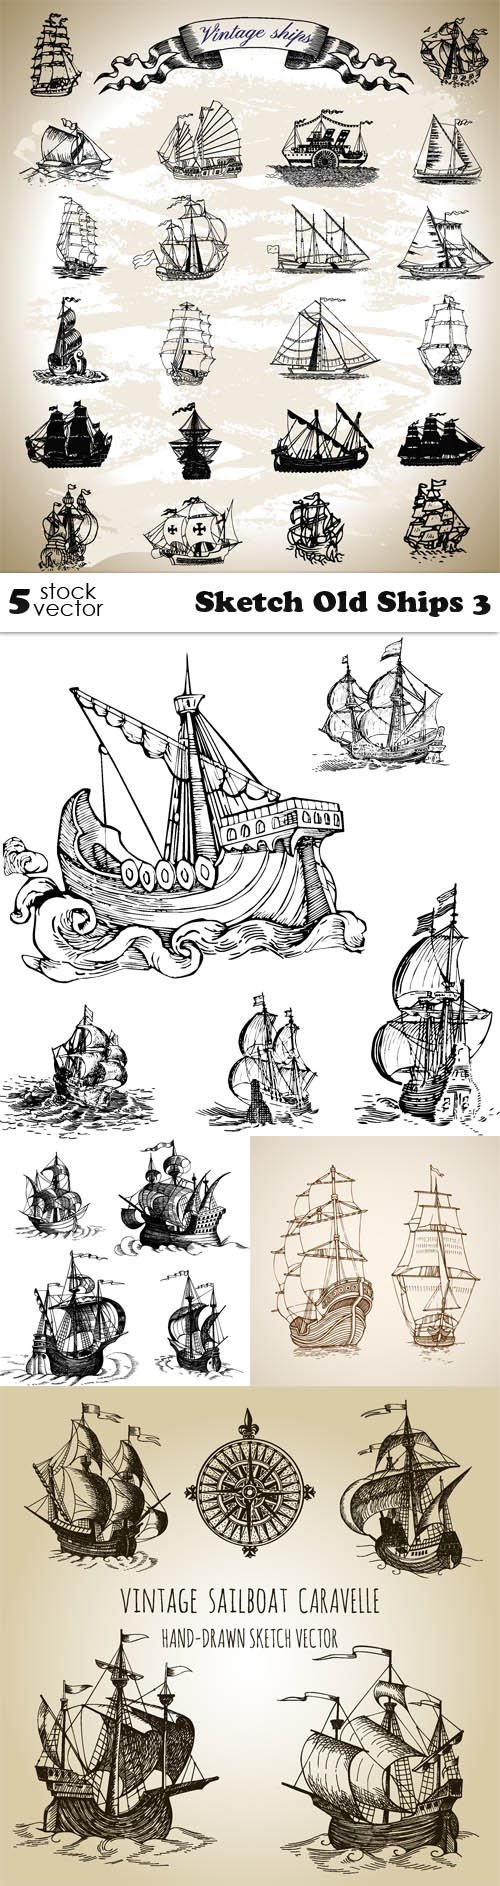 Vectors - Sketch Old Ships 3